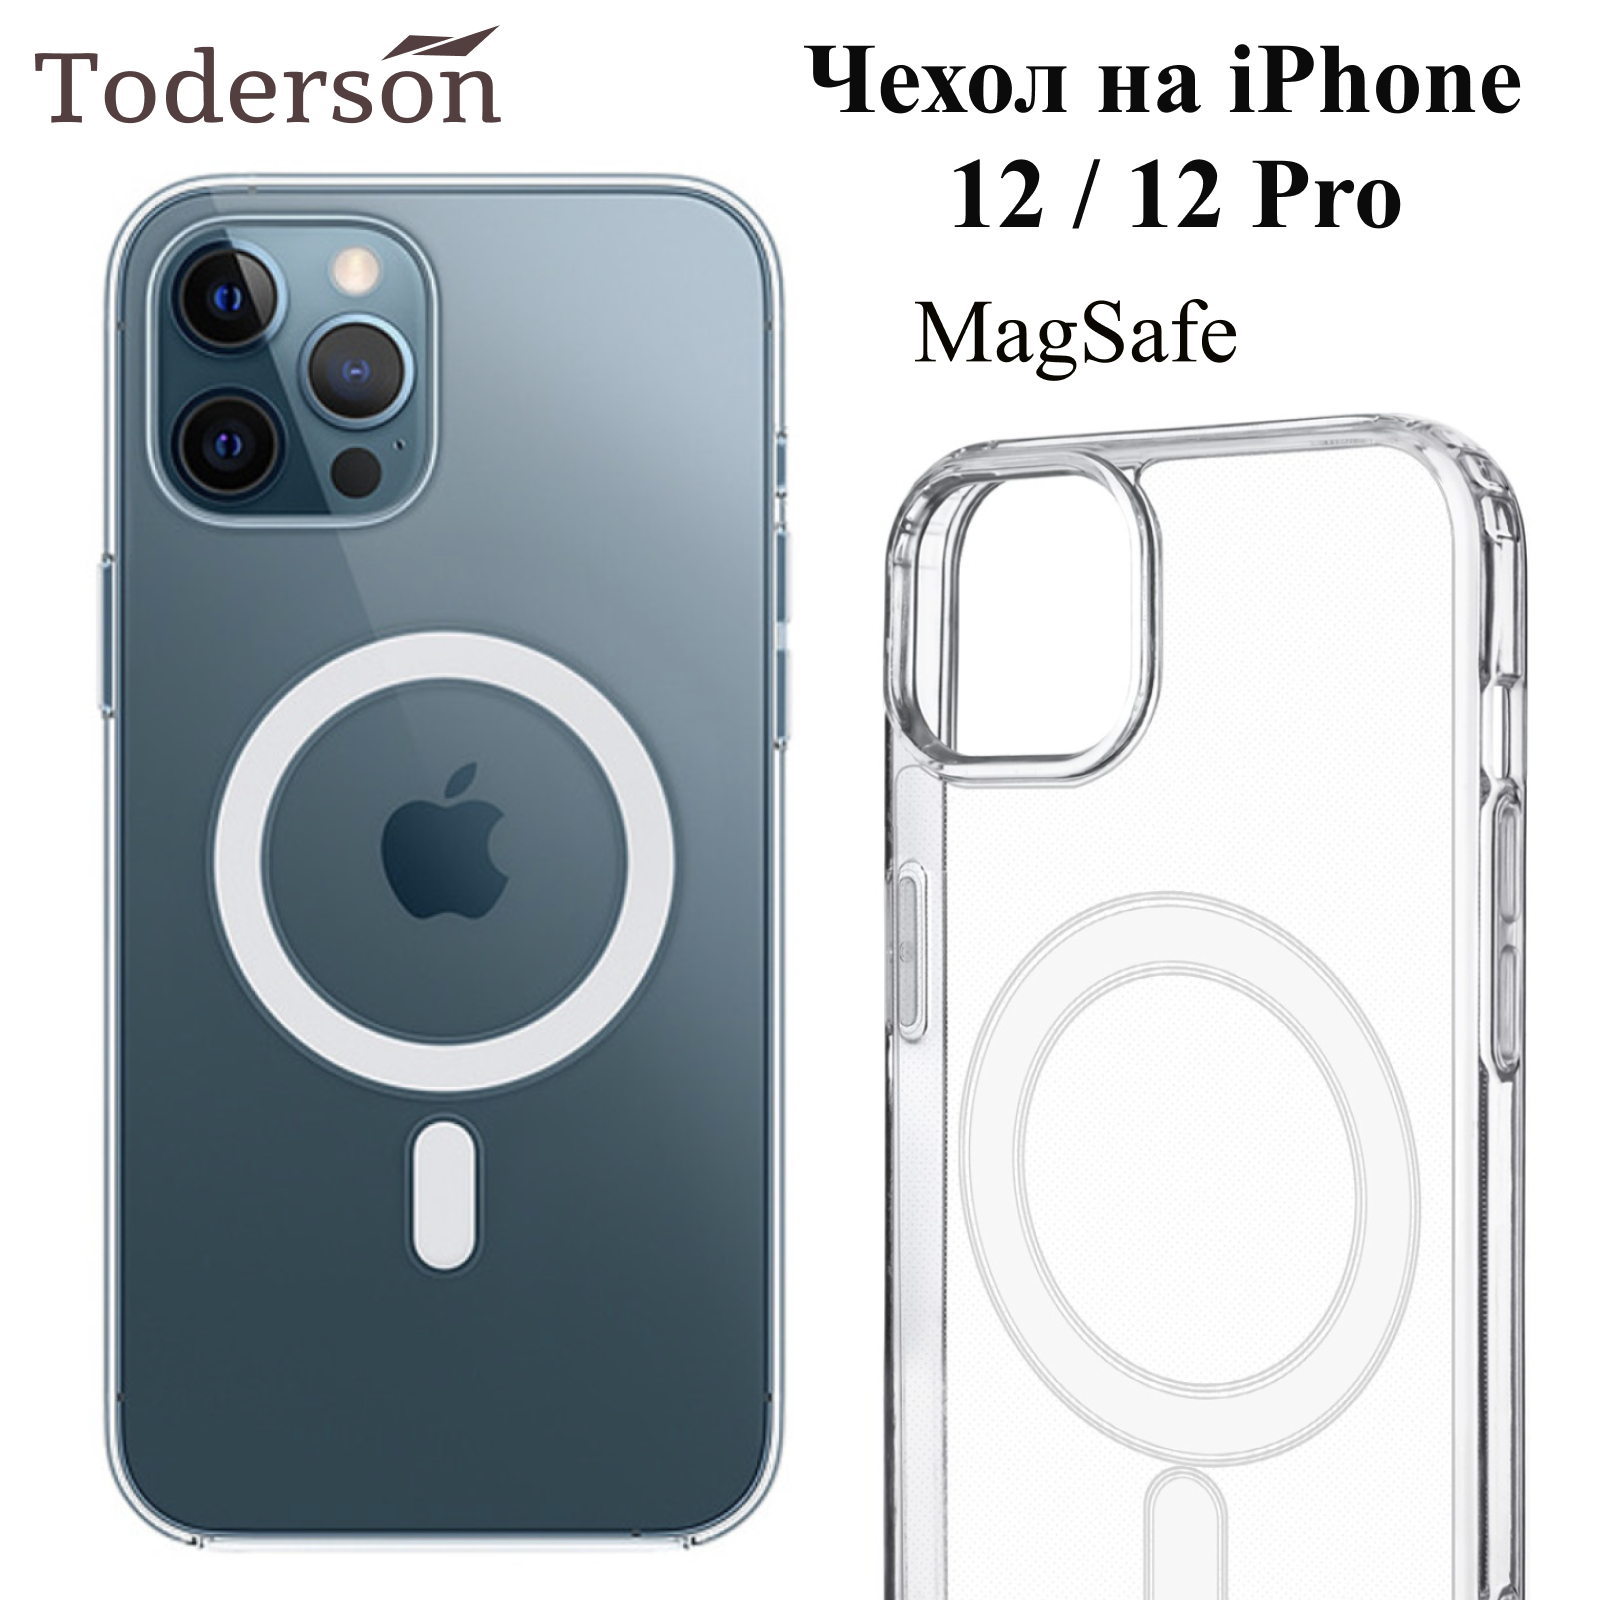 Чехол на iPhone 12 / 12 Pro MagSafe Toderson